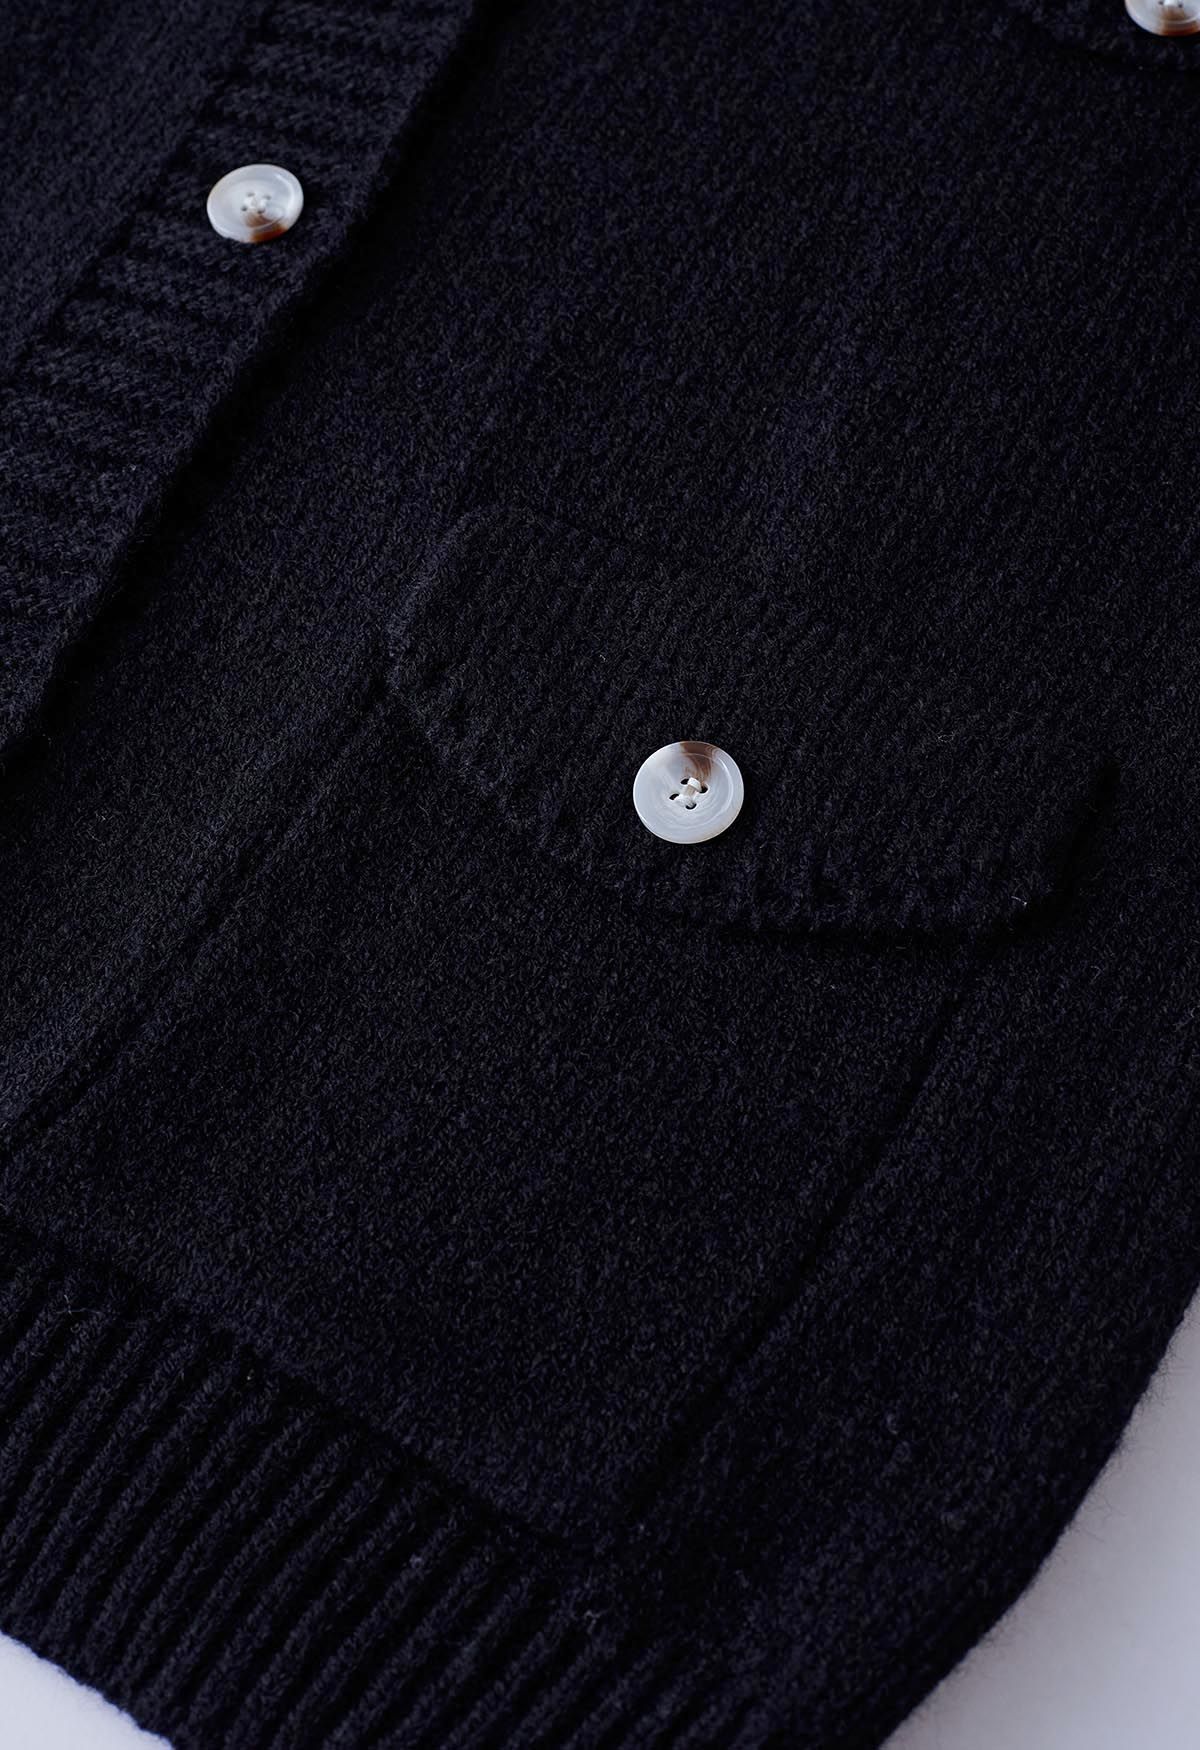 Flap Pocket Button Down Knit Vest in Black